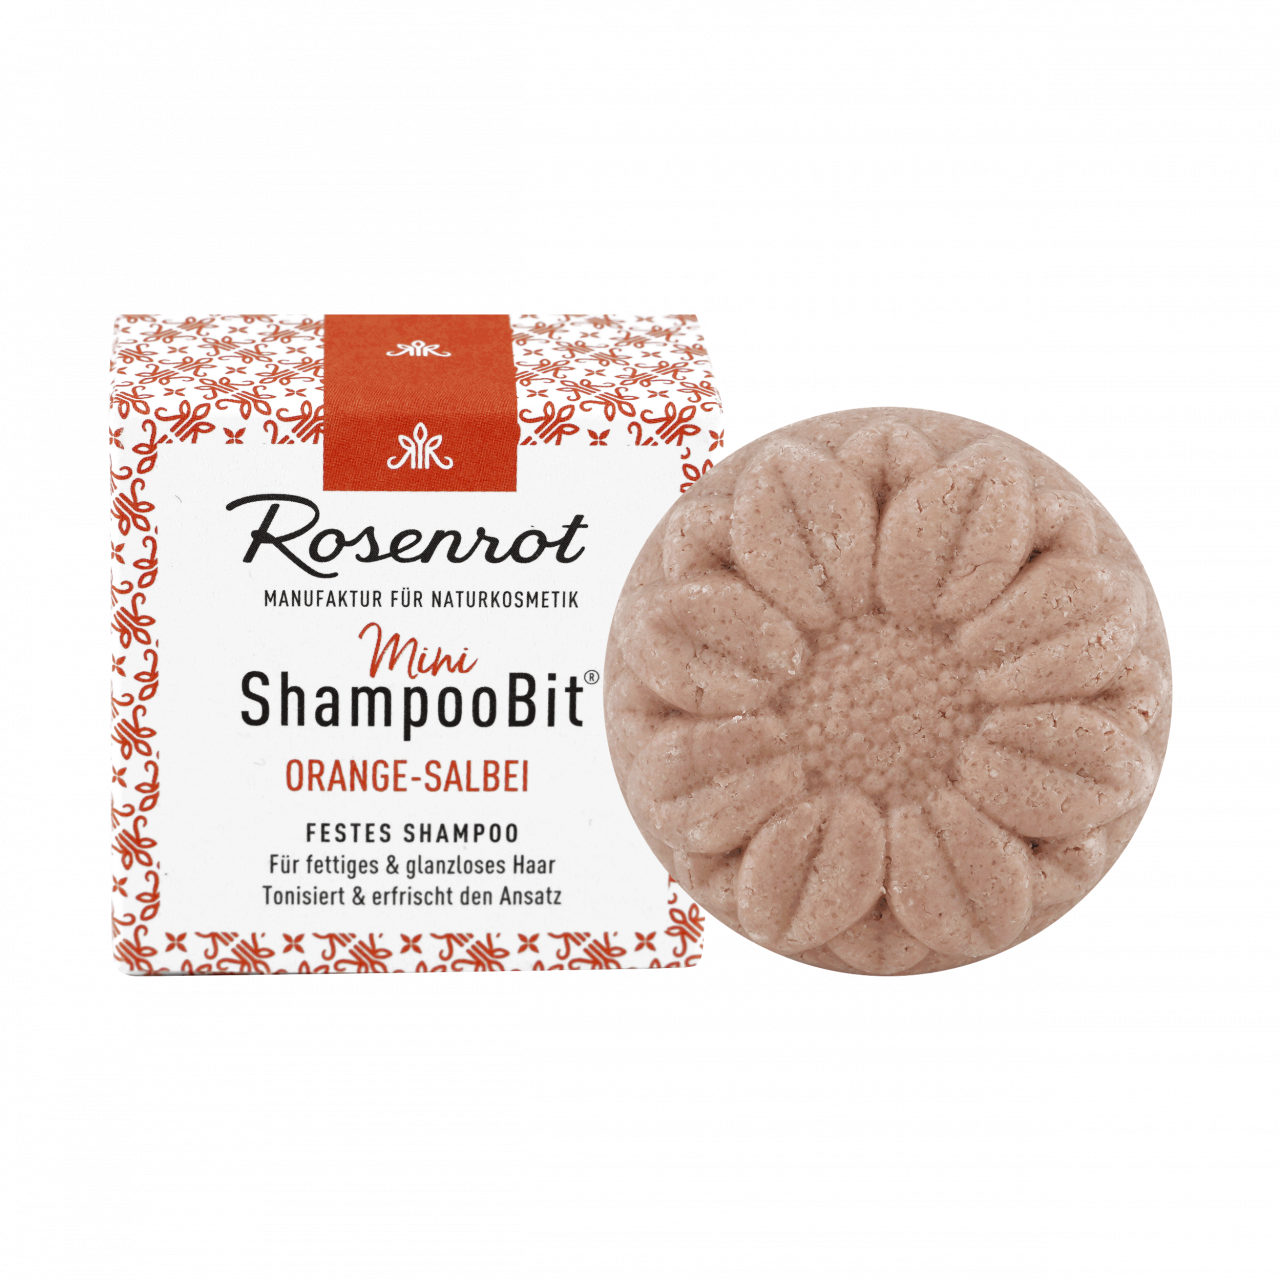 Mini ShampooBit® - Orange-Salbei